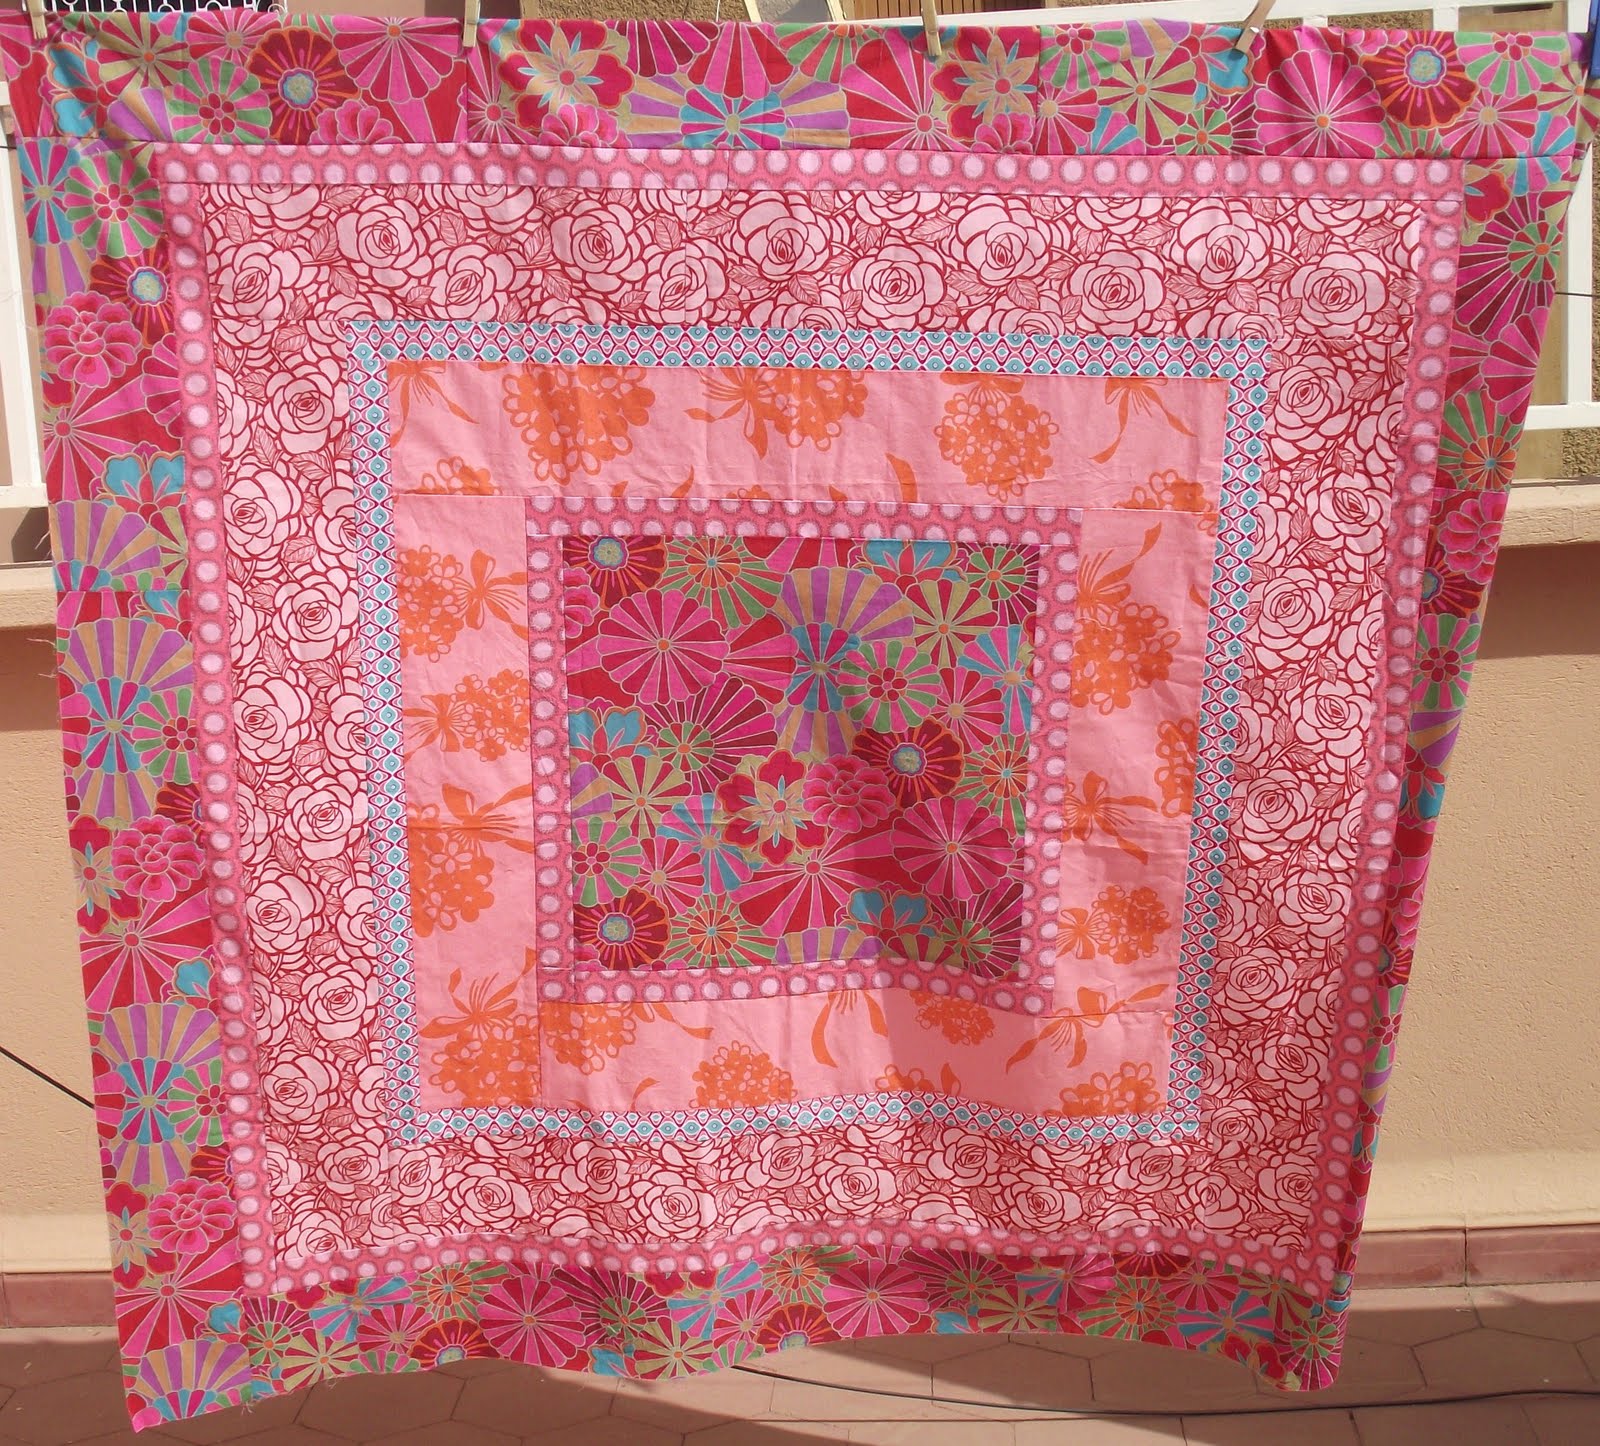 Life's Rich Pattern: The Marrakech Rose Quilt